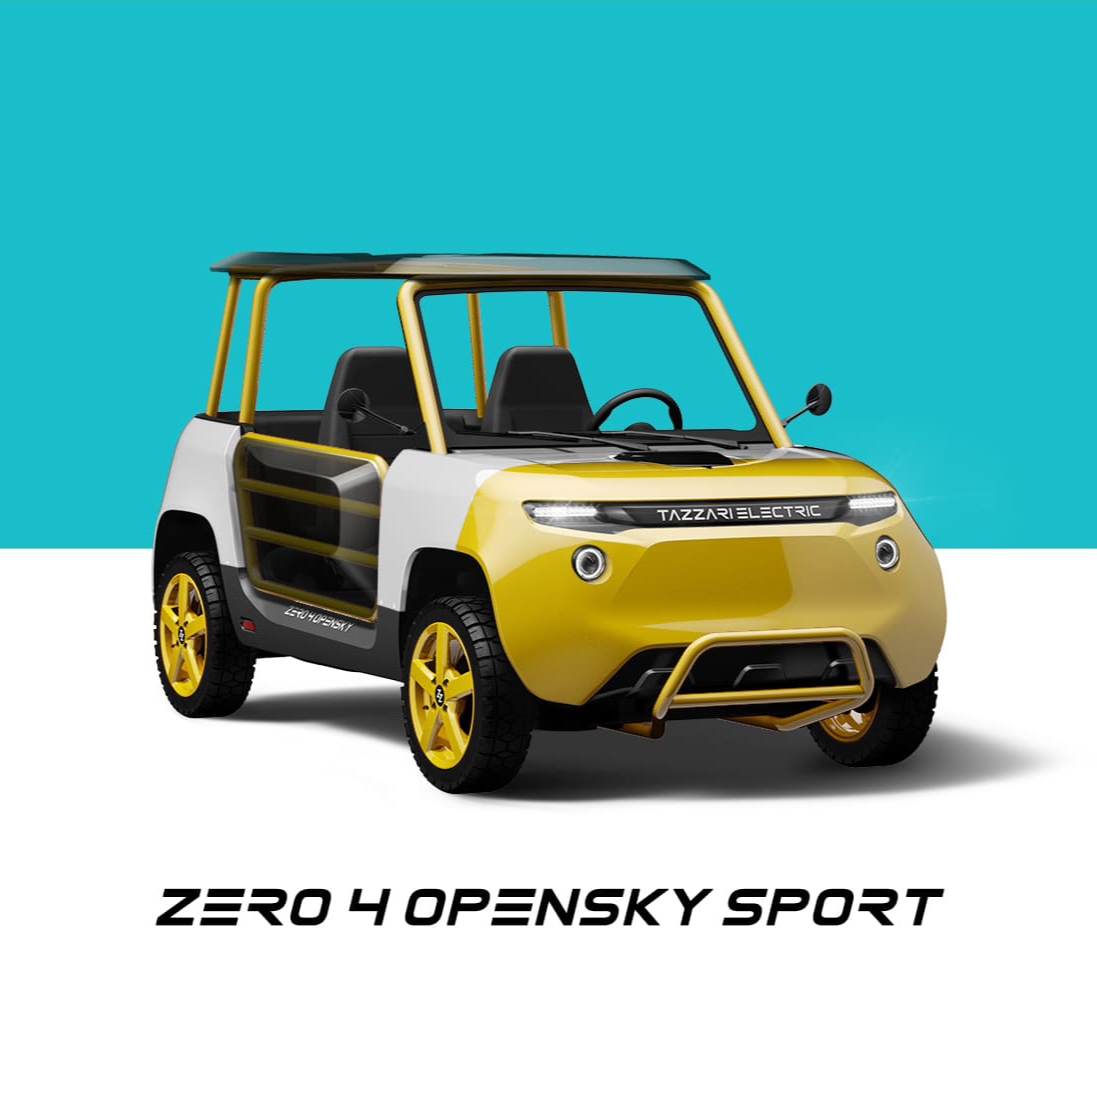 Zero 4 Opensky Sport